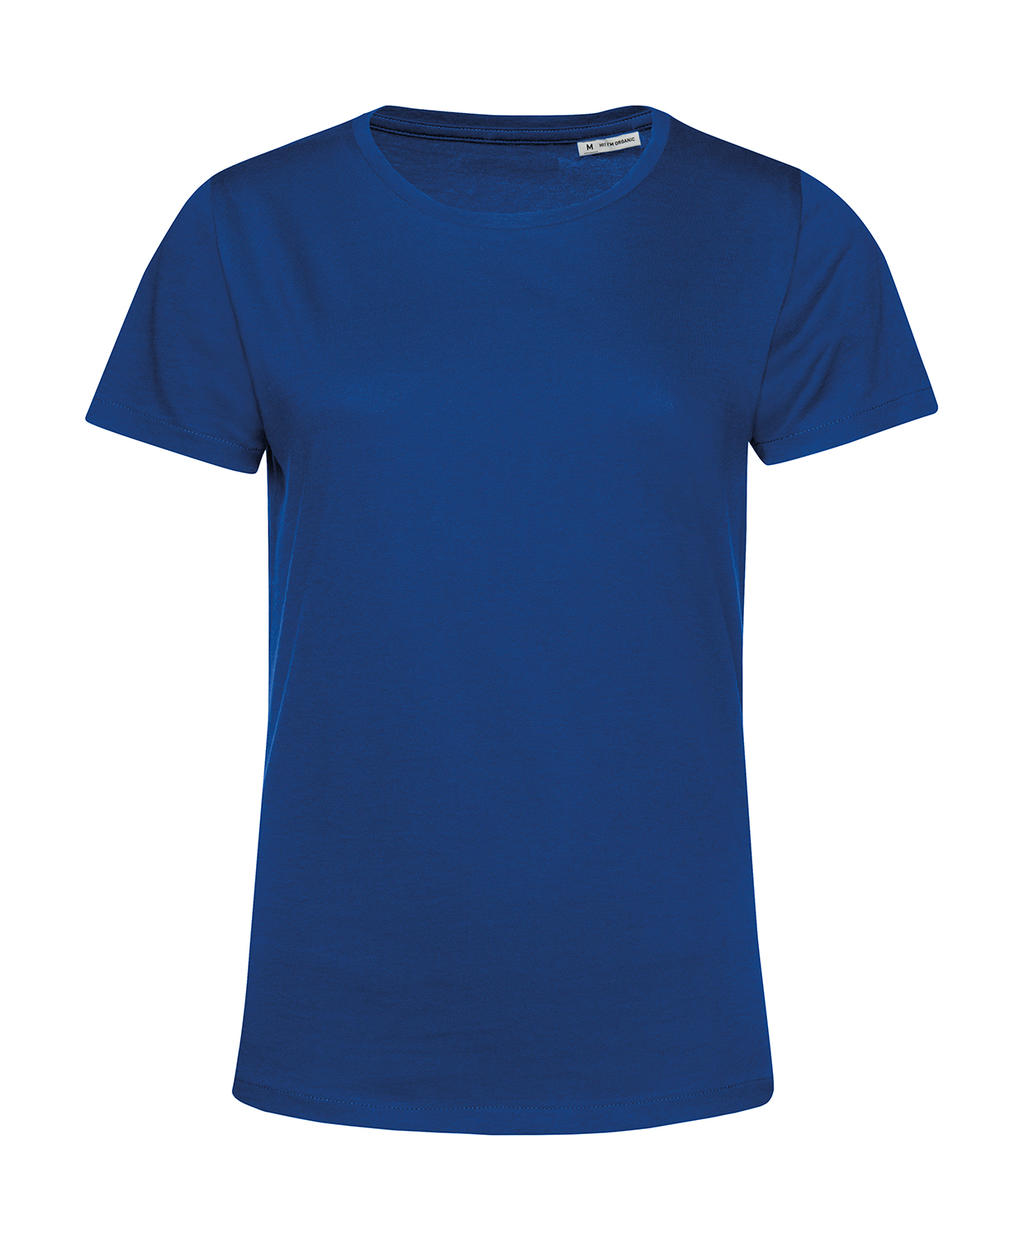 Tričko dámské BC Organic Inspire E150 - modré, XL